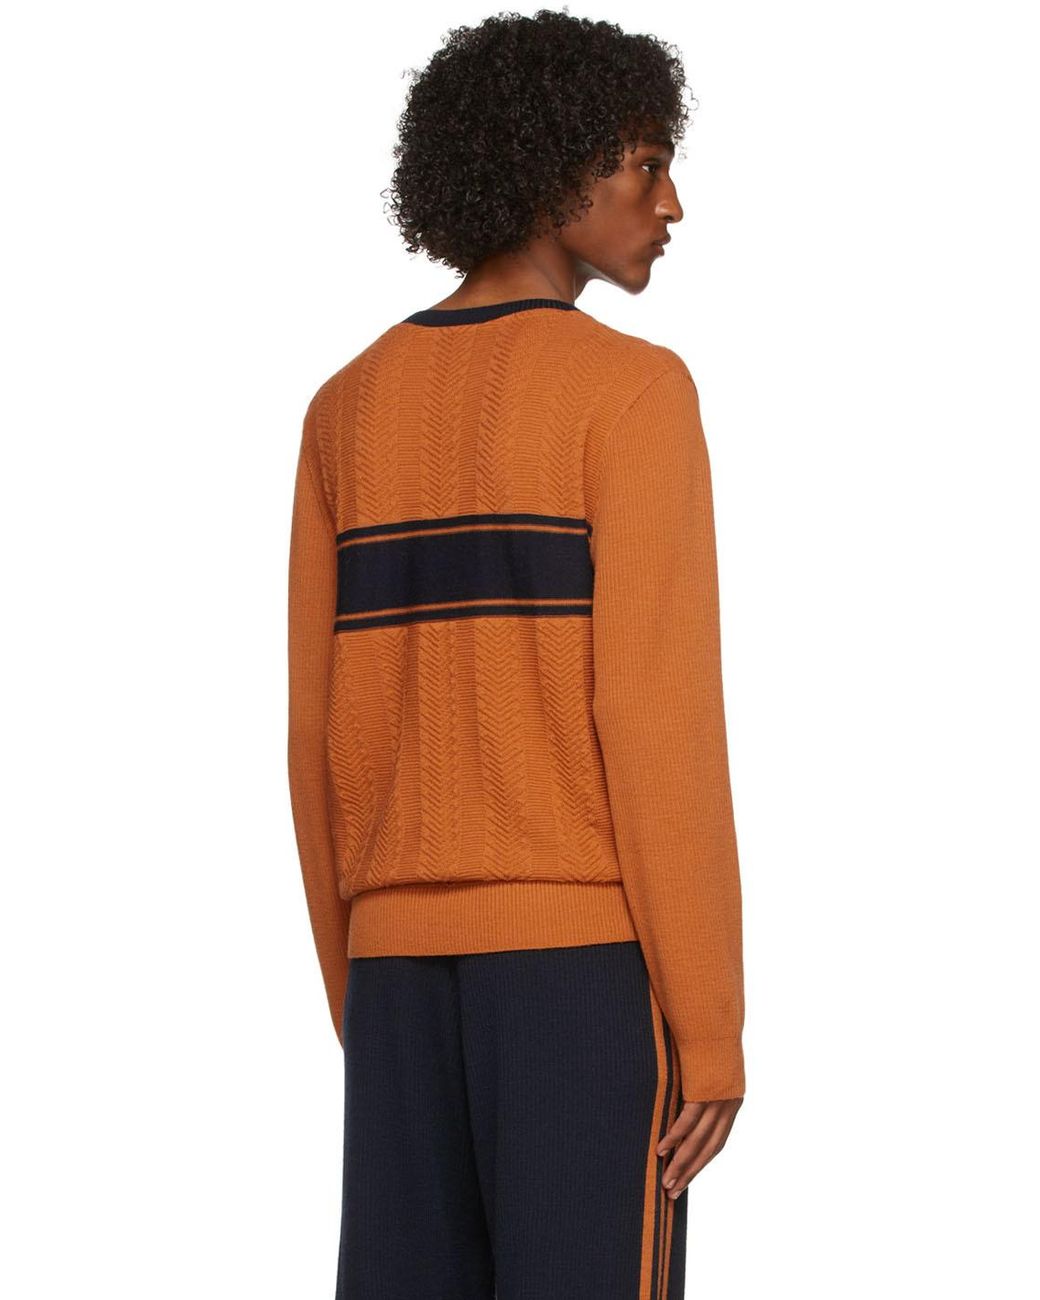 Wales Bonner Adidas Originals Edition Knit V-neck Sweater in Orange for Men  | Lyst Australia